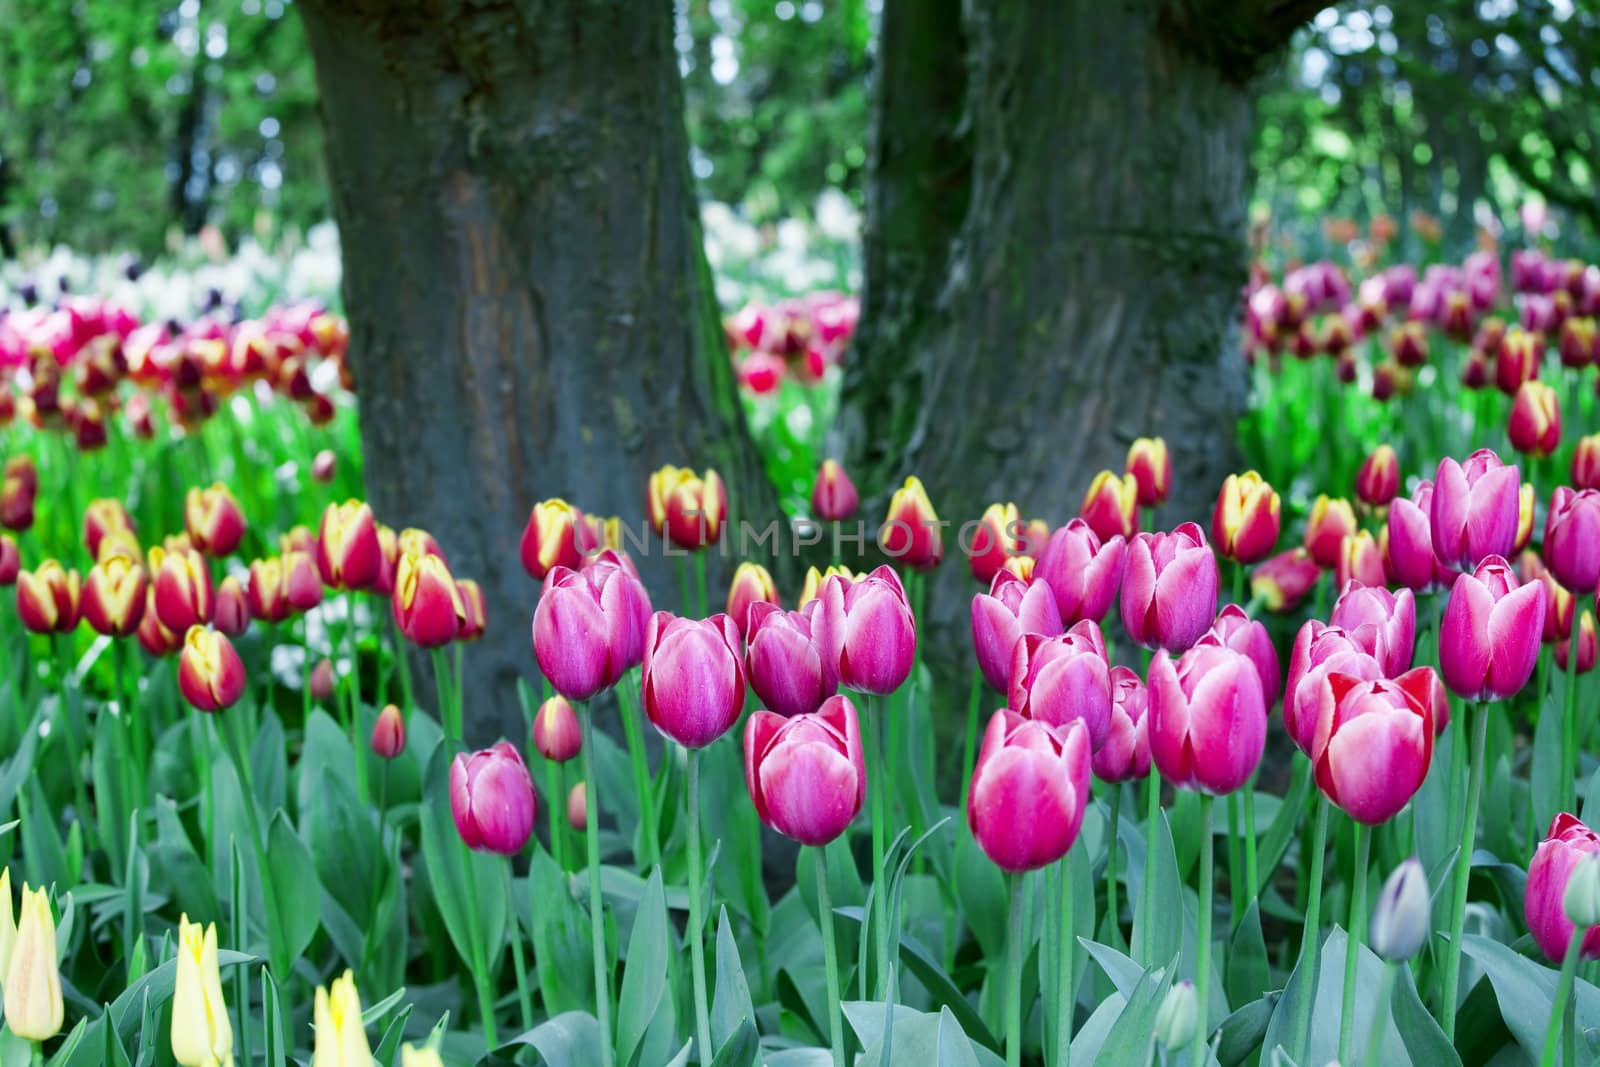 Colorful sea of beautiful tulips in full bloom